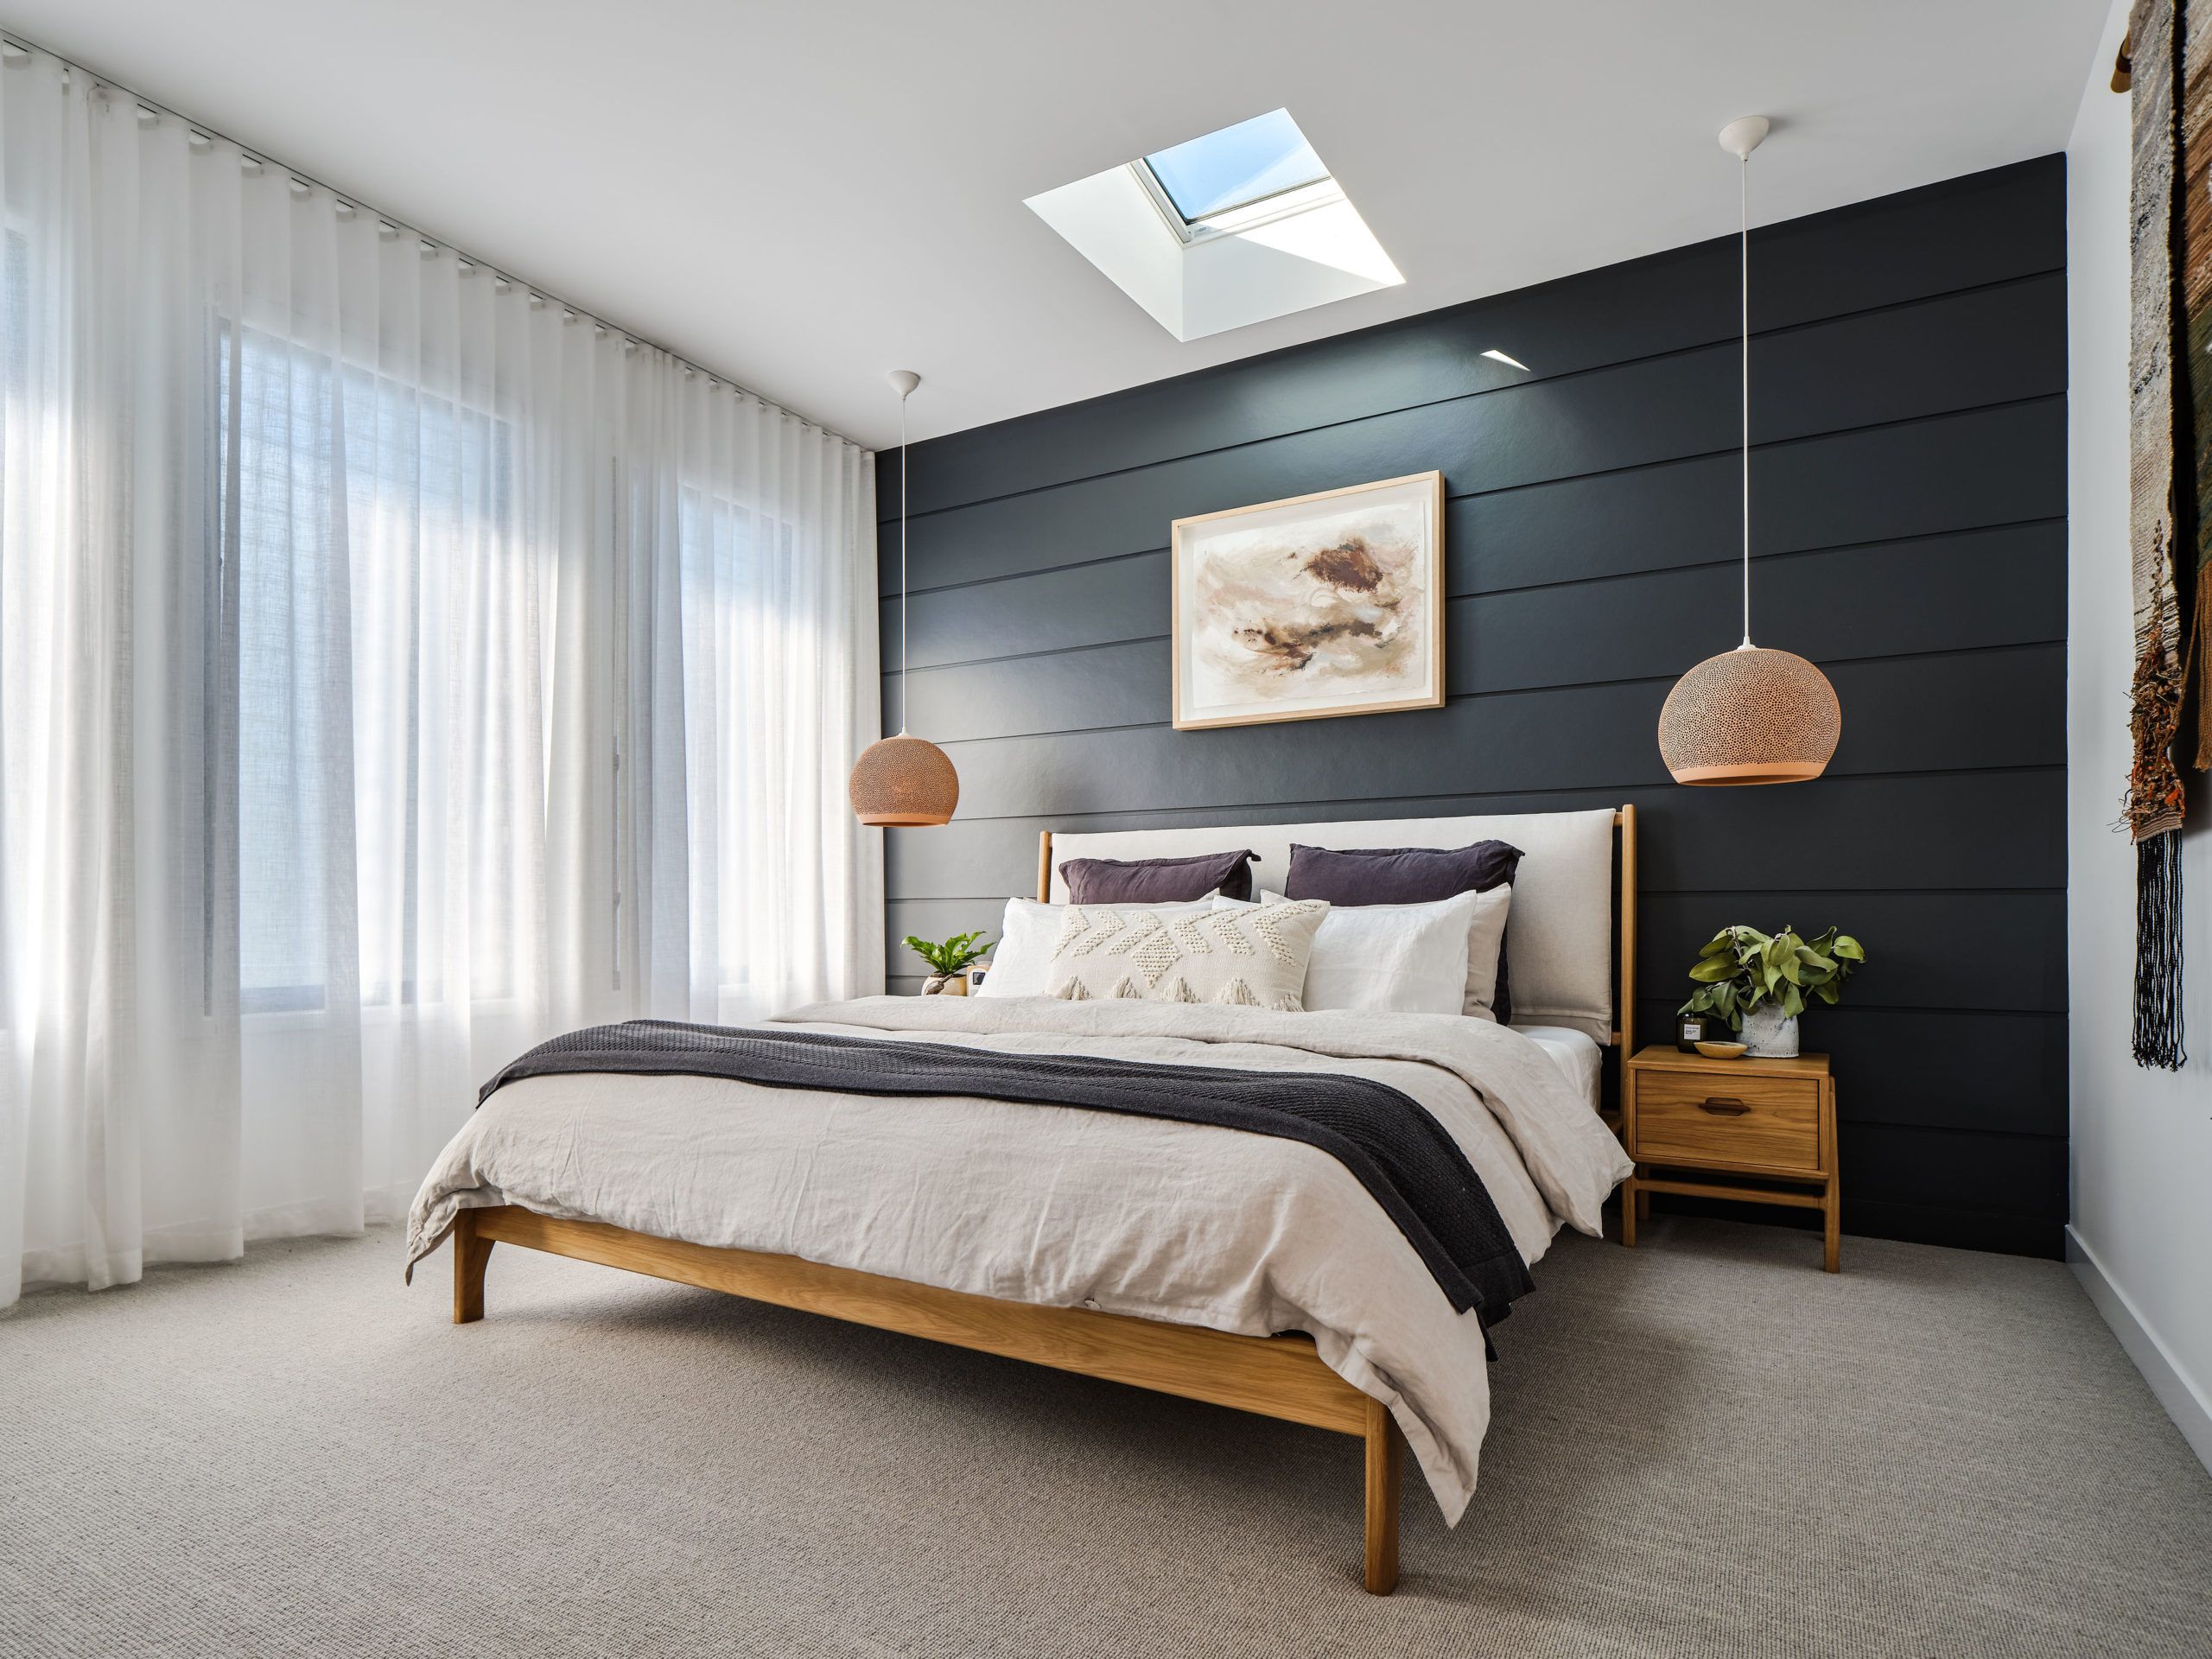 Bedroom Room • Barefoot Bay Villa designed by The Designory • Byron Bay